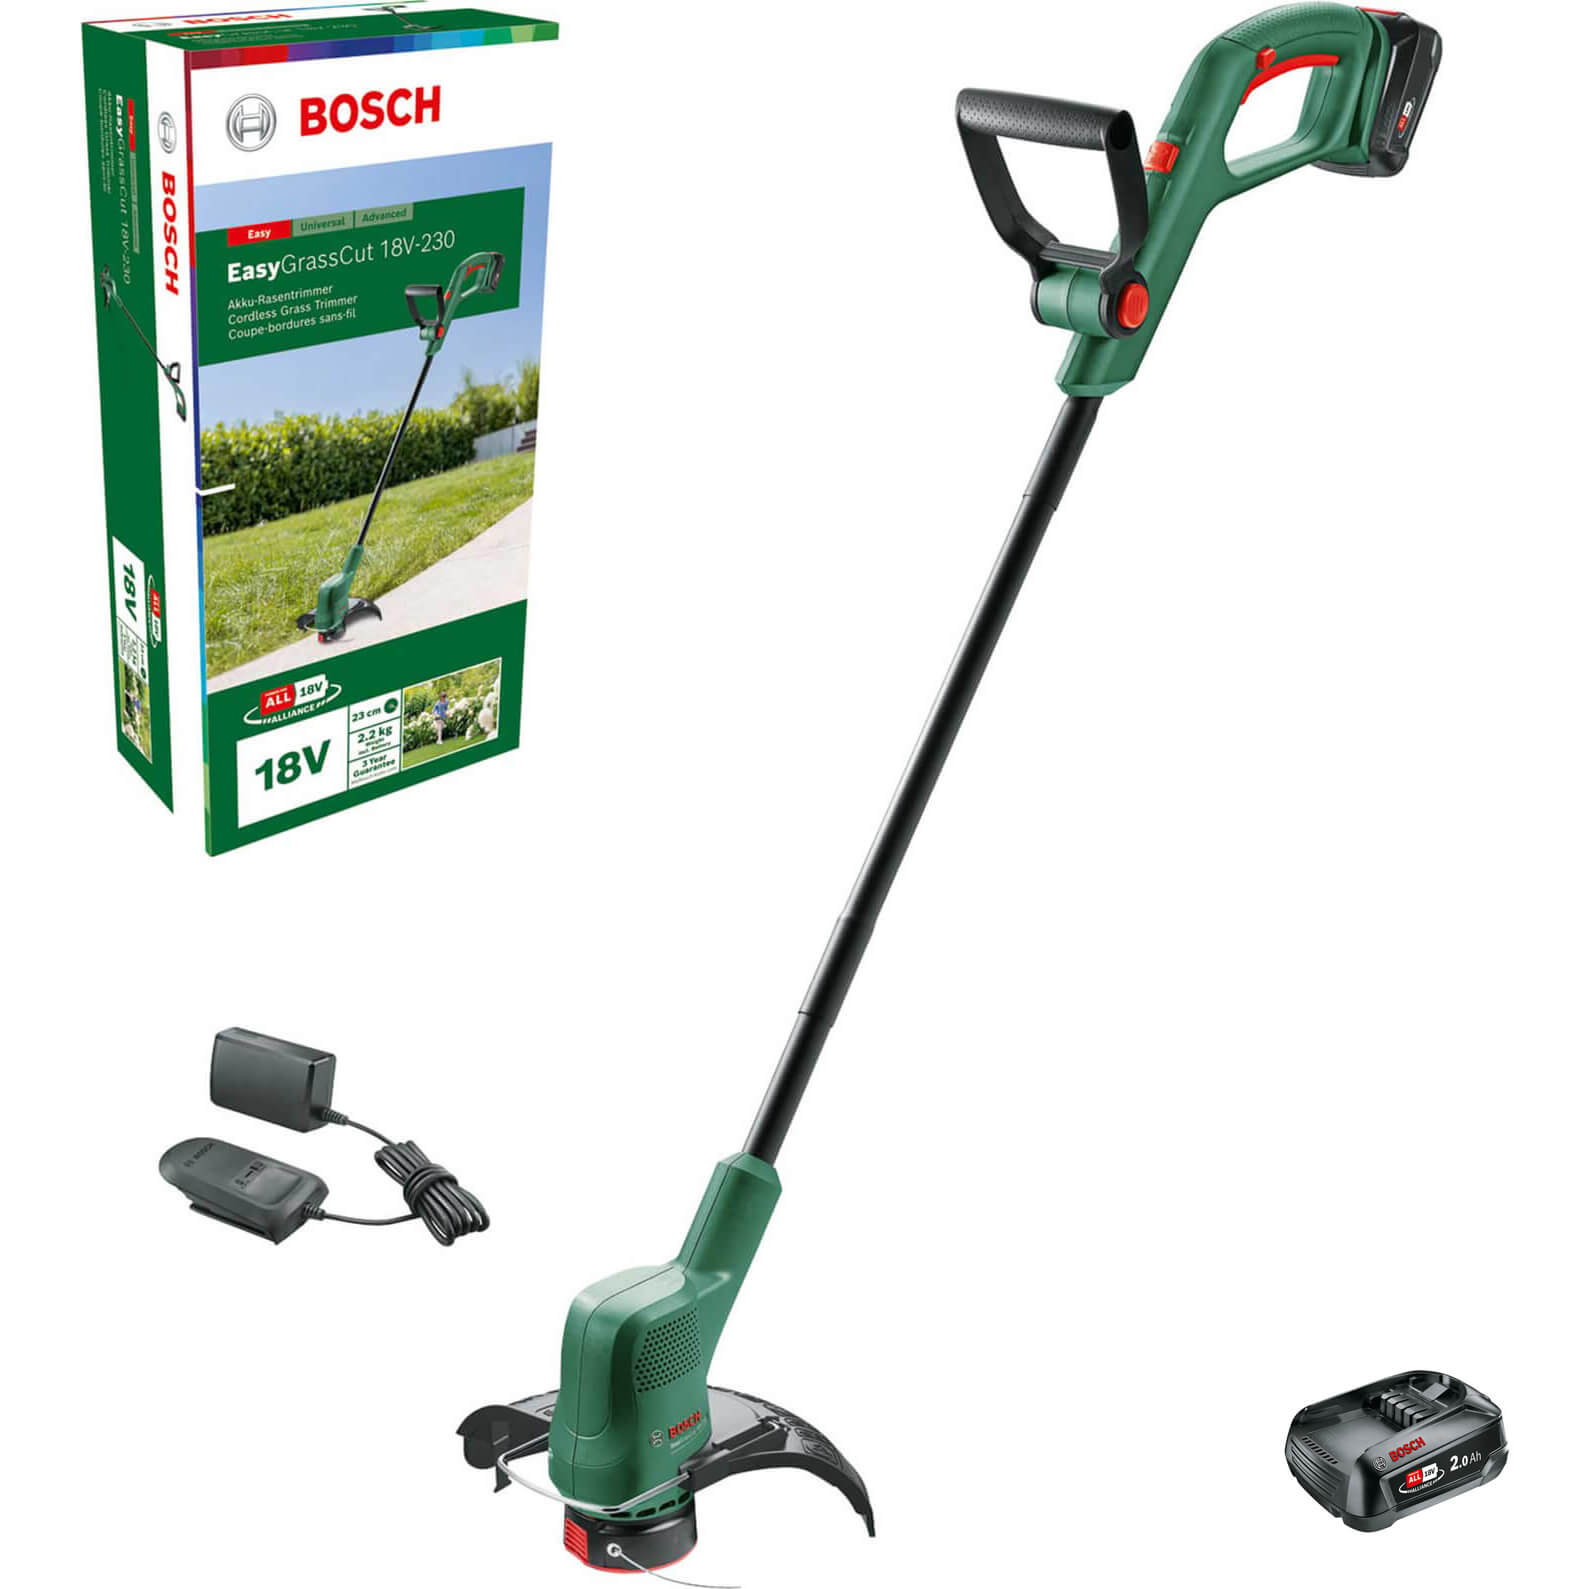 Bosch EASYGRASSCUT 18V-230 P4A 18v Cordless Grass Trimmer and Edger 230mm 2 x 2ah Li-ion Charger